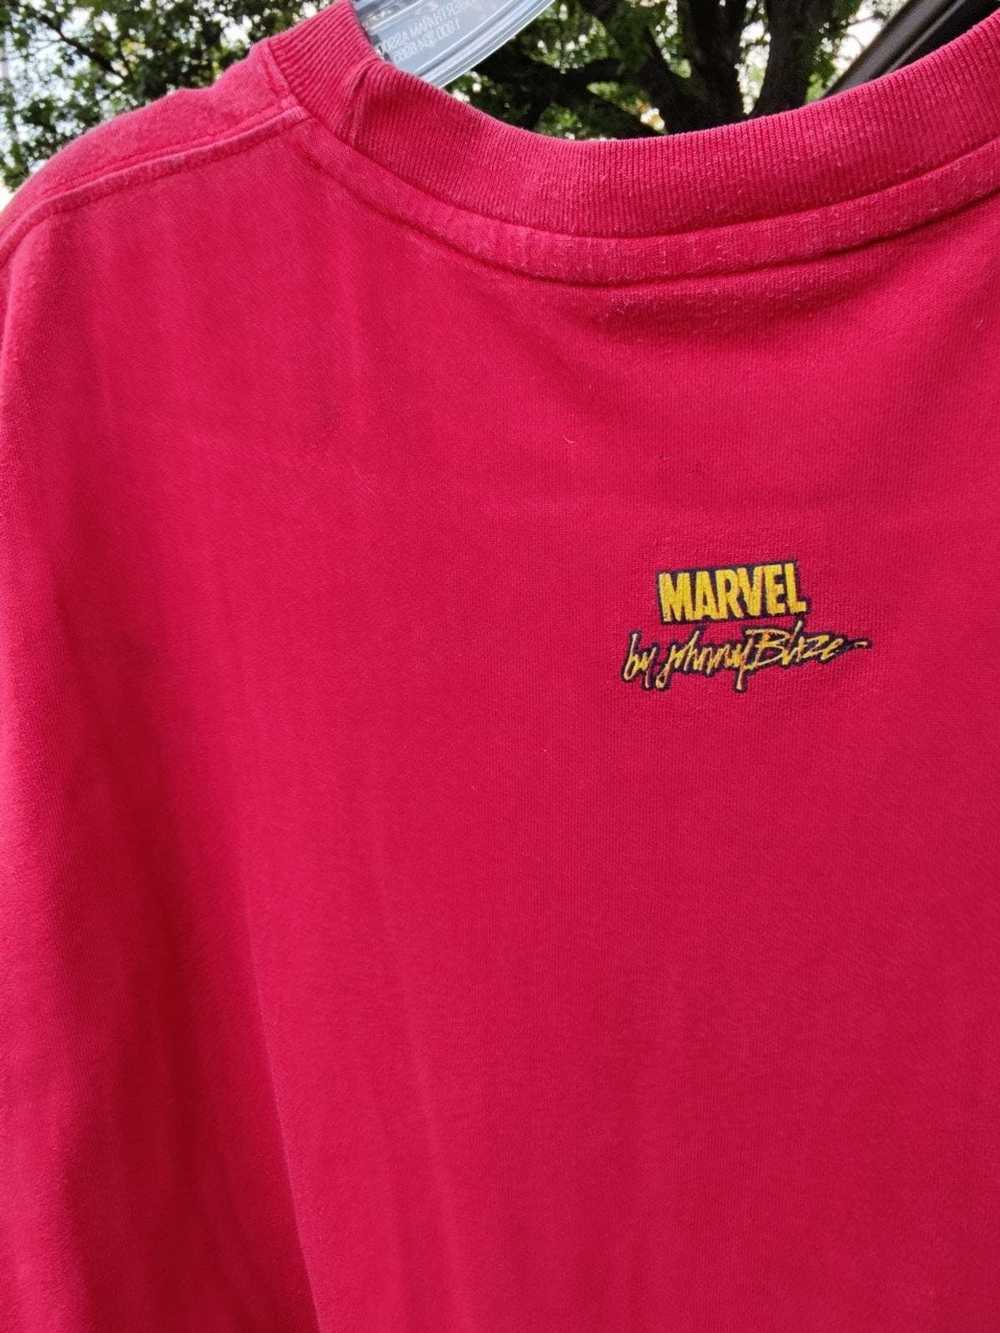 Marvel Comics Vintage 90s spiderman Shirt - image 3